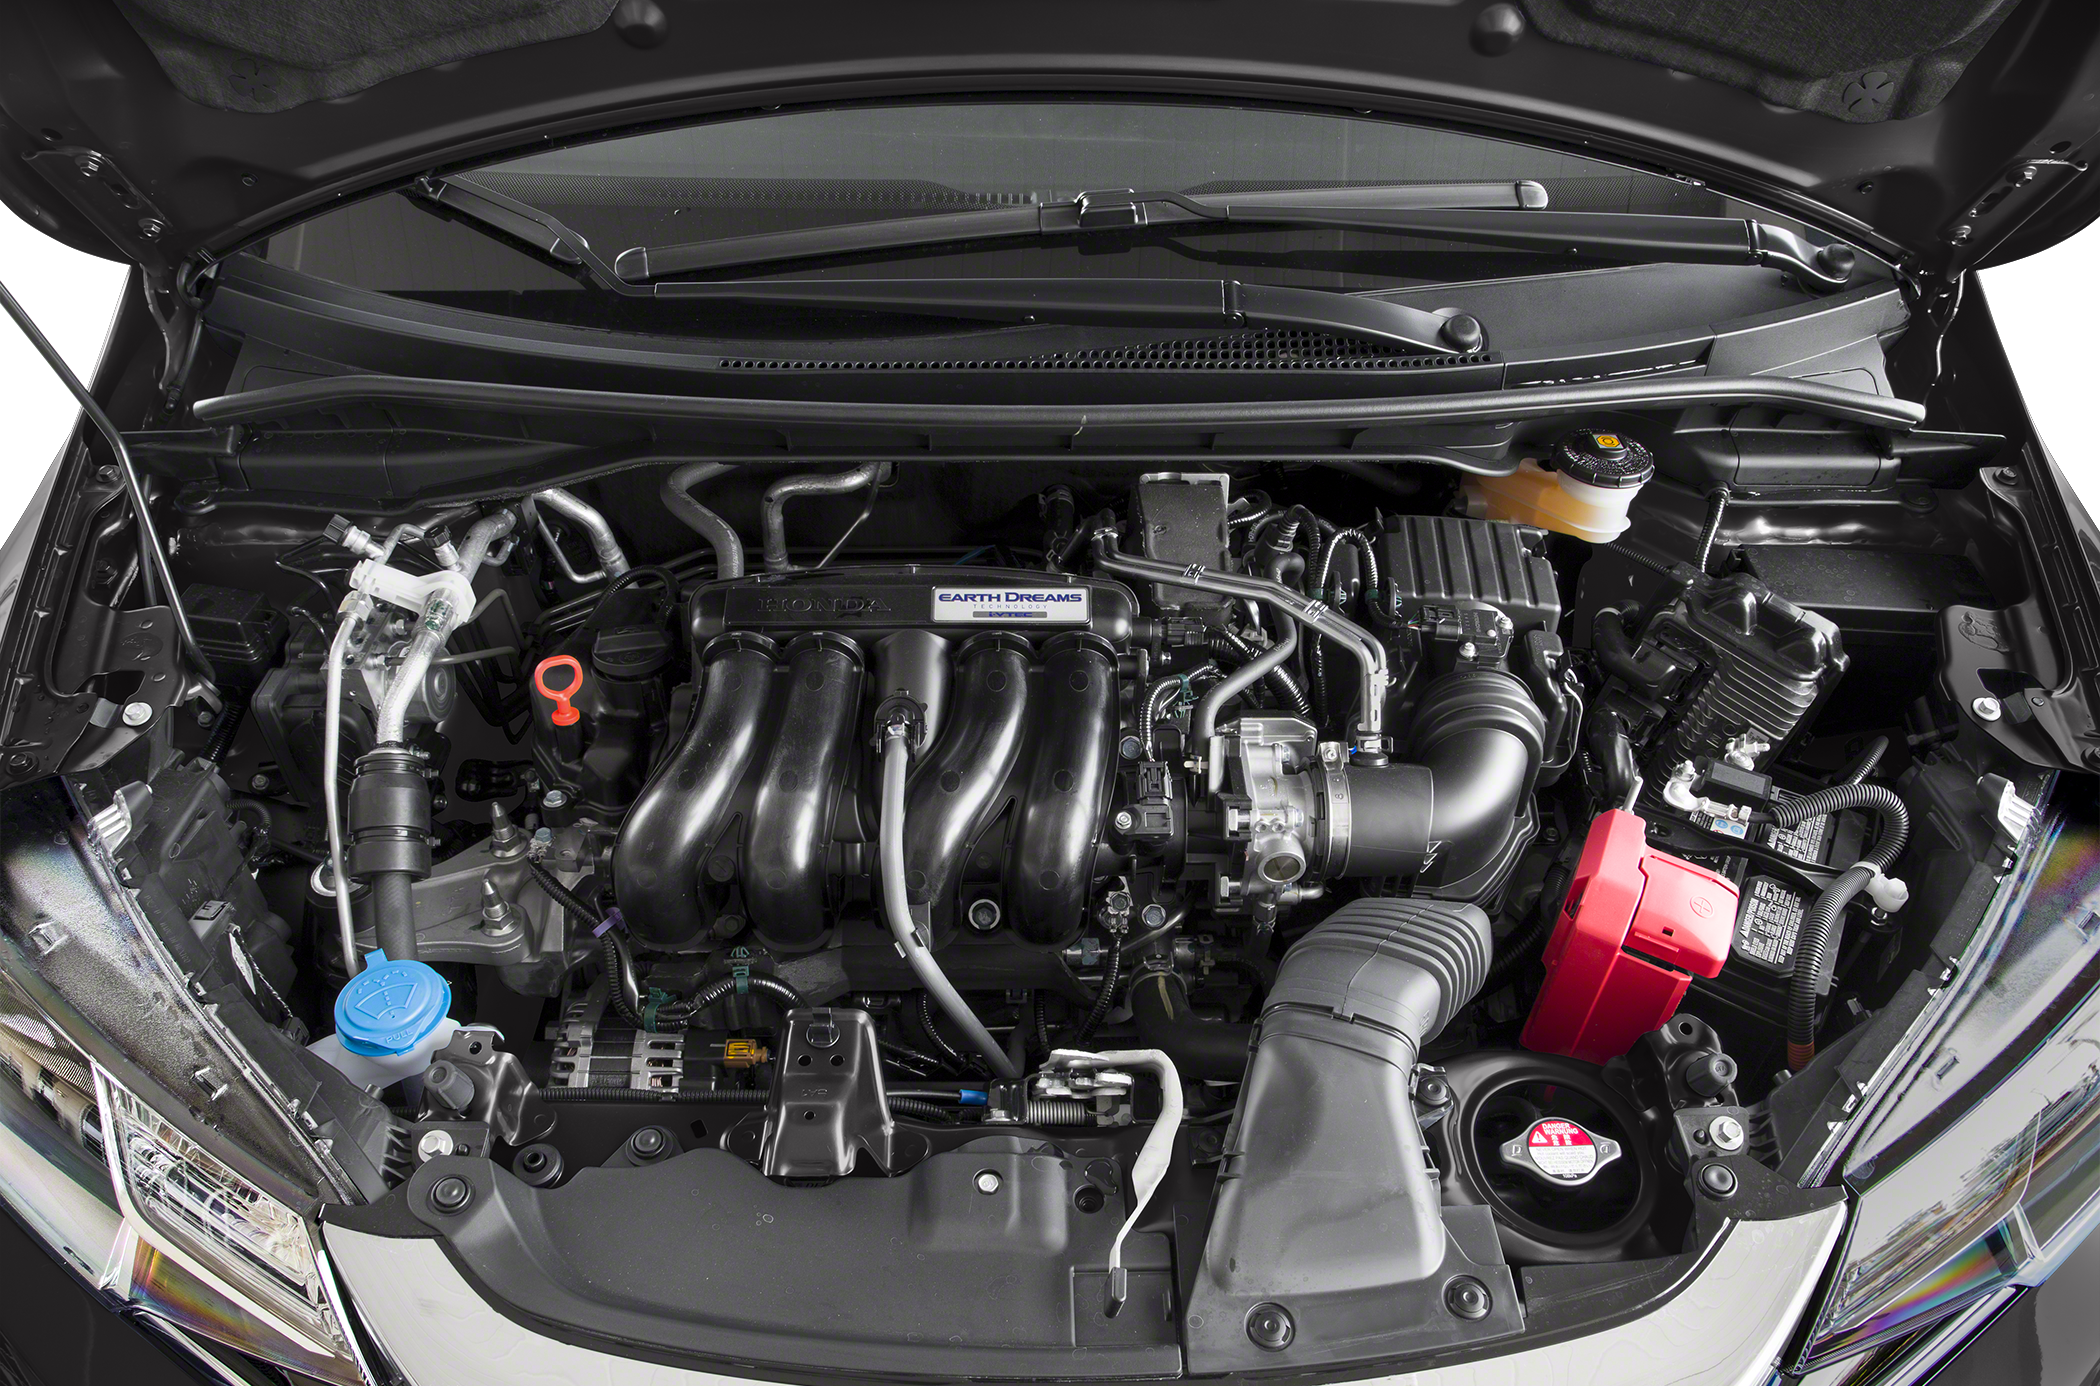 2020 Honda Fit Sport 4dr Hatchback Specs and Prices - Autoblog